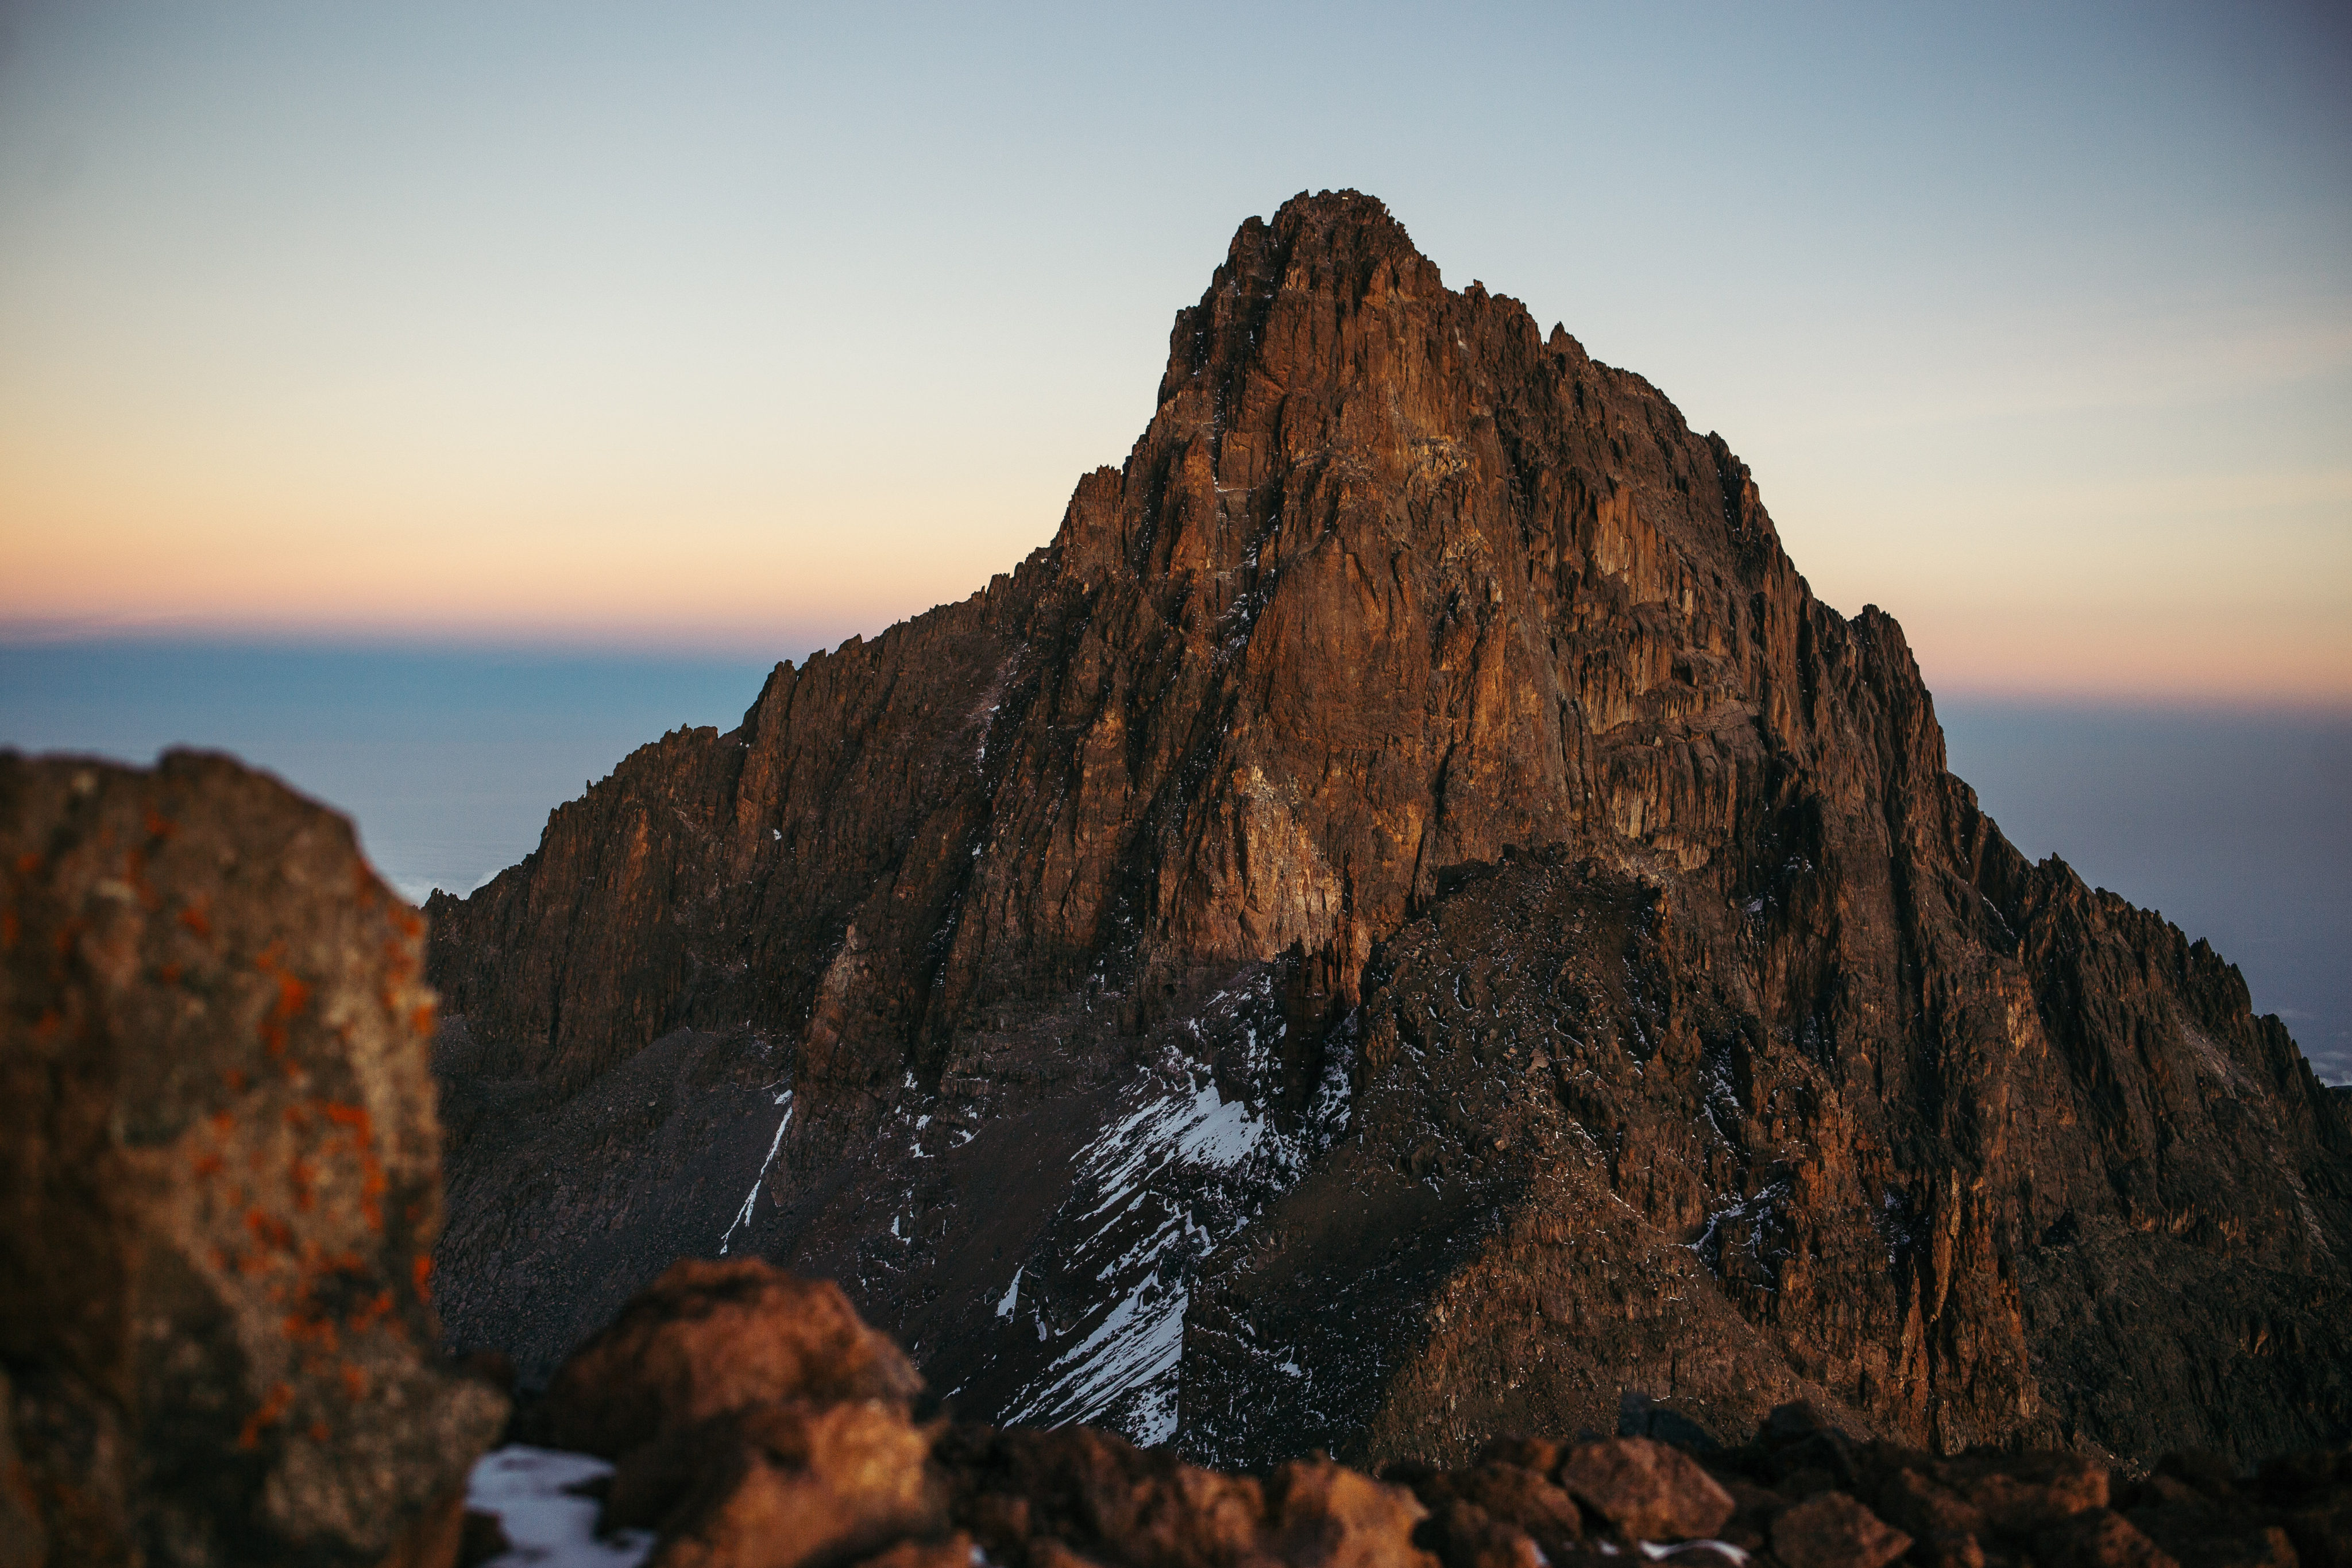 Dawn on Nelion, the second highest peak on Mount Kenya, seen from Point Lenana. Photo: Kang-Chun Cheng